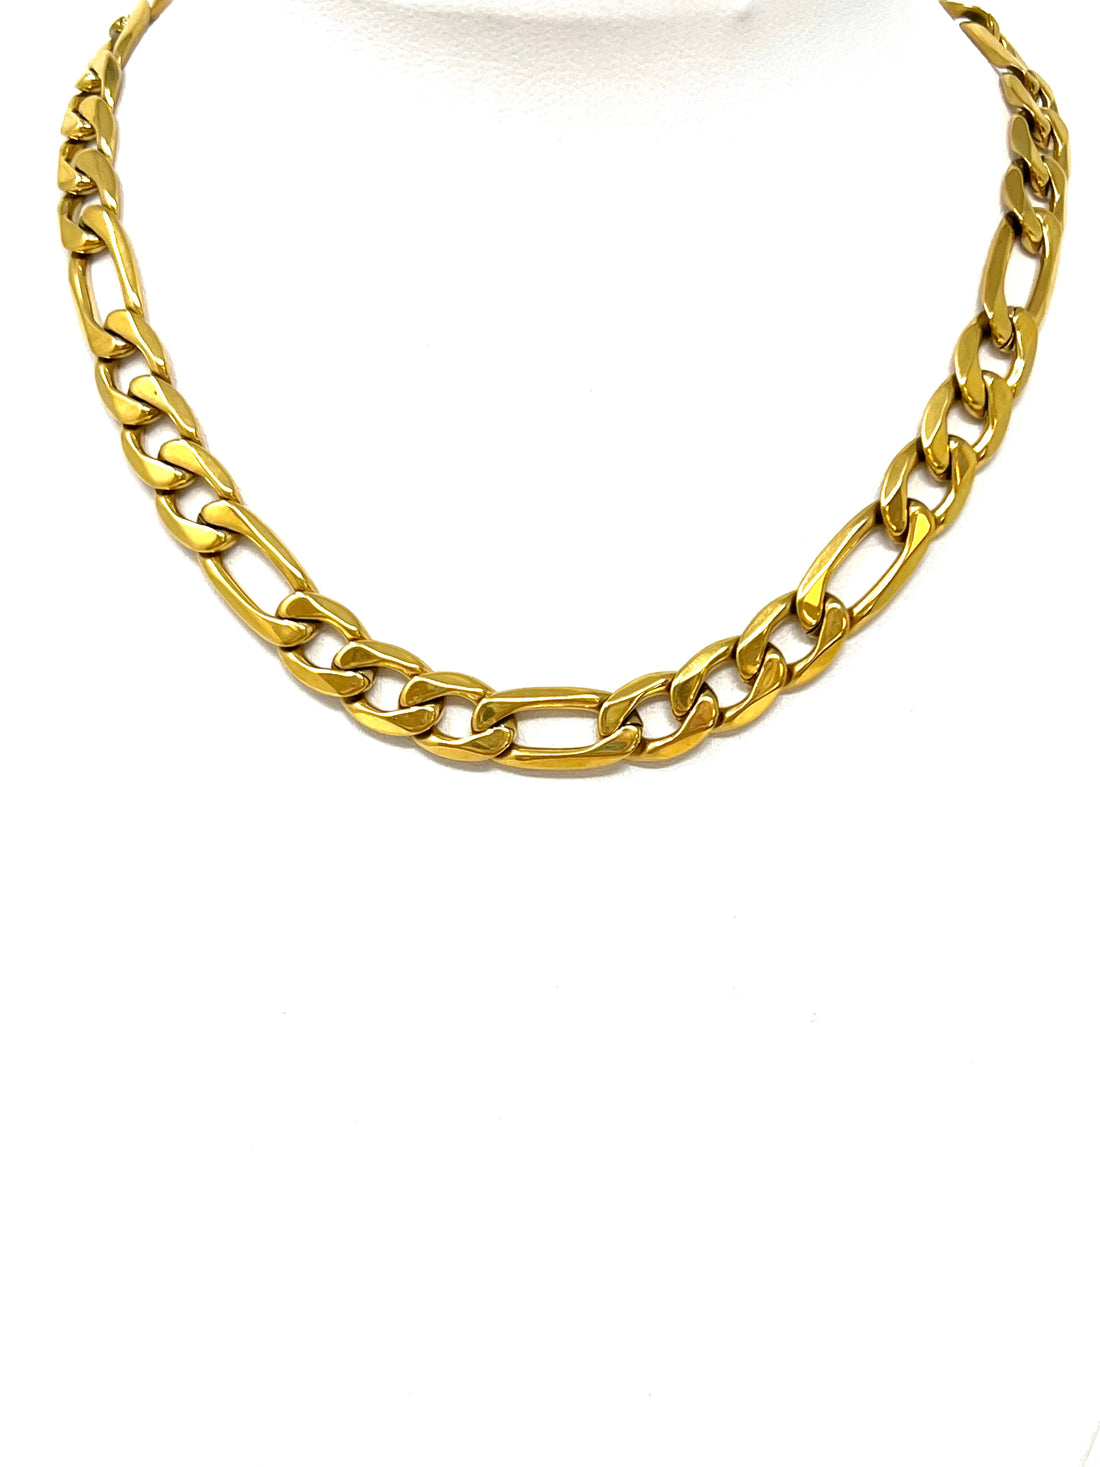 Paris Necklace in Gold